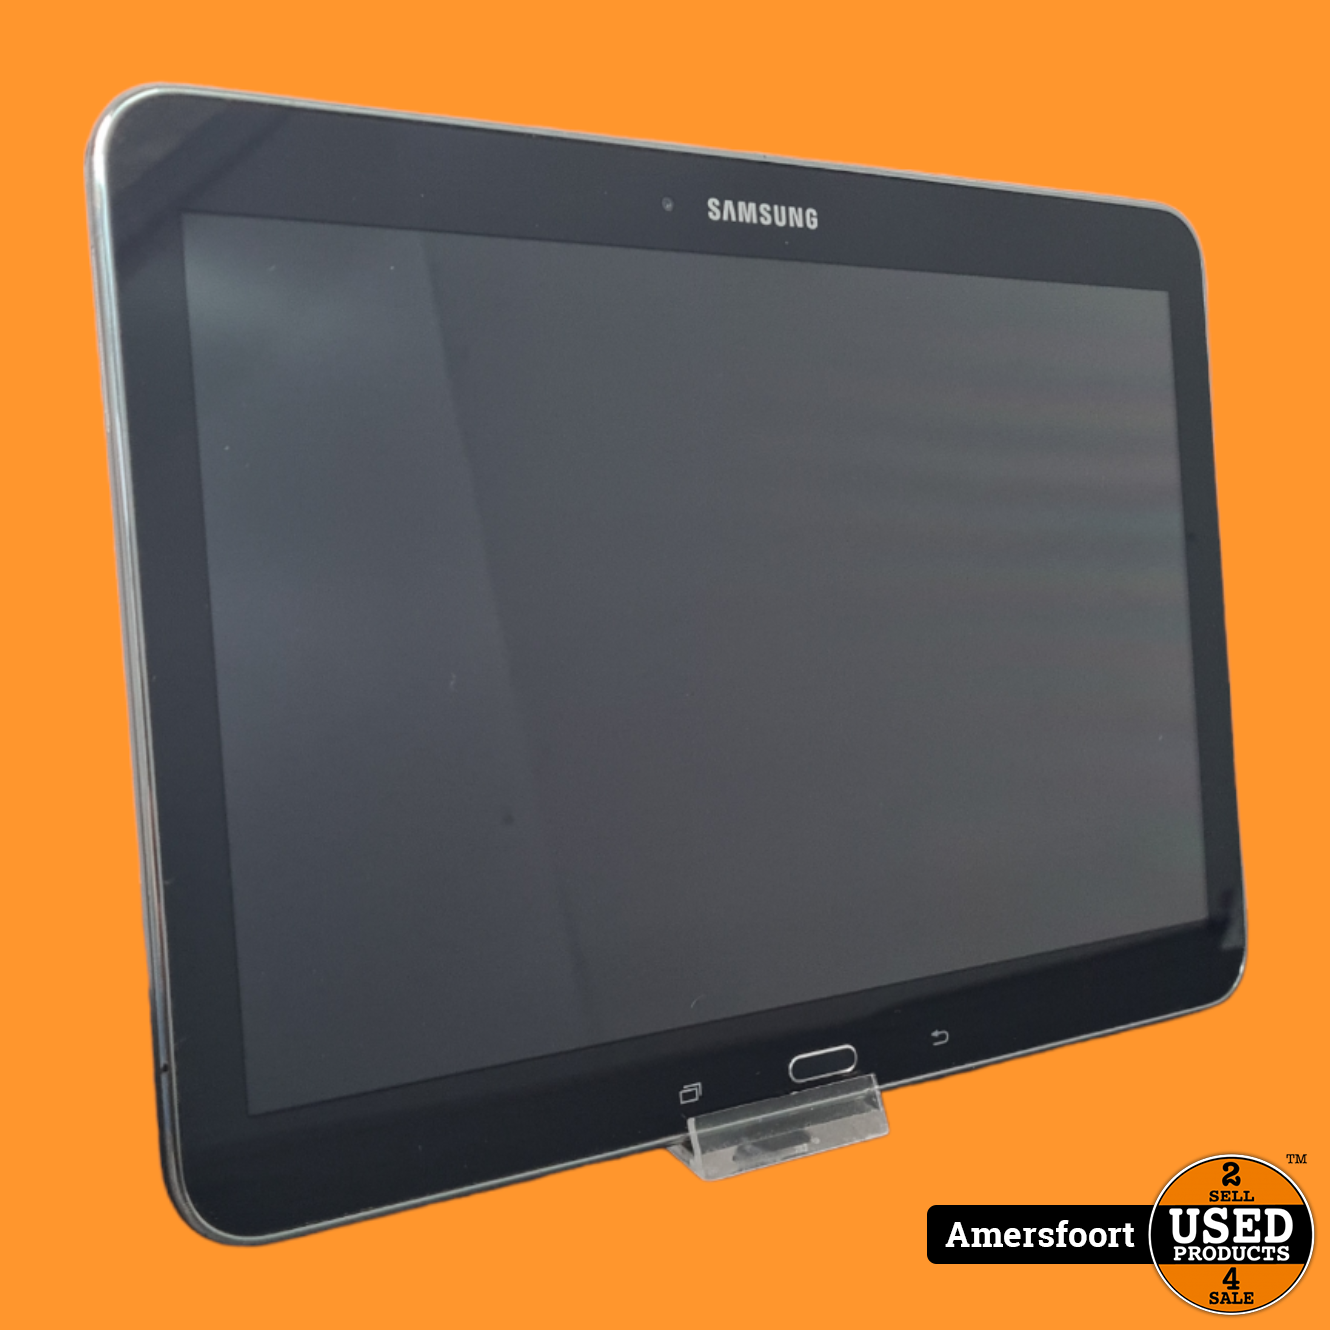 verkoper Omgeving Symptomen Samsung Galaxy Tab 4 10.1 16GB Wifi - Used Products Amersfoort